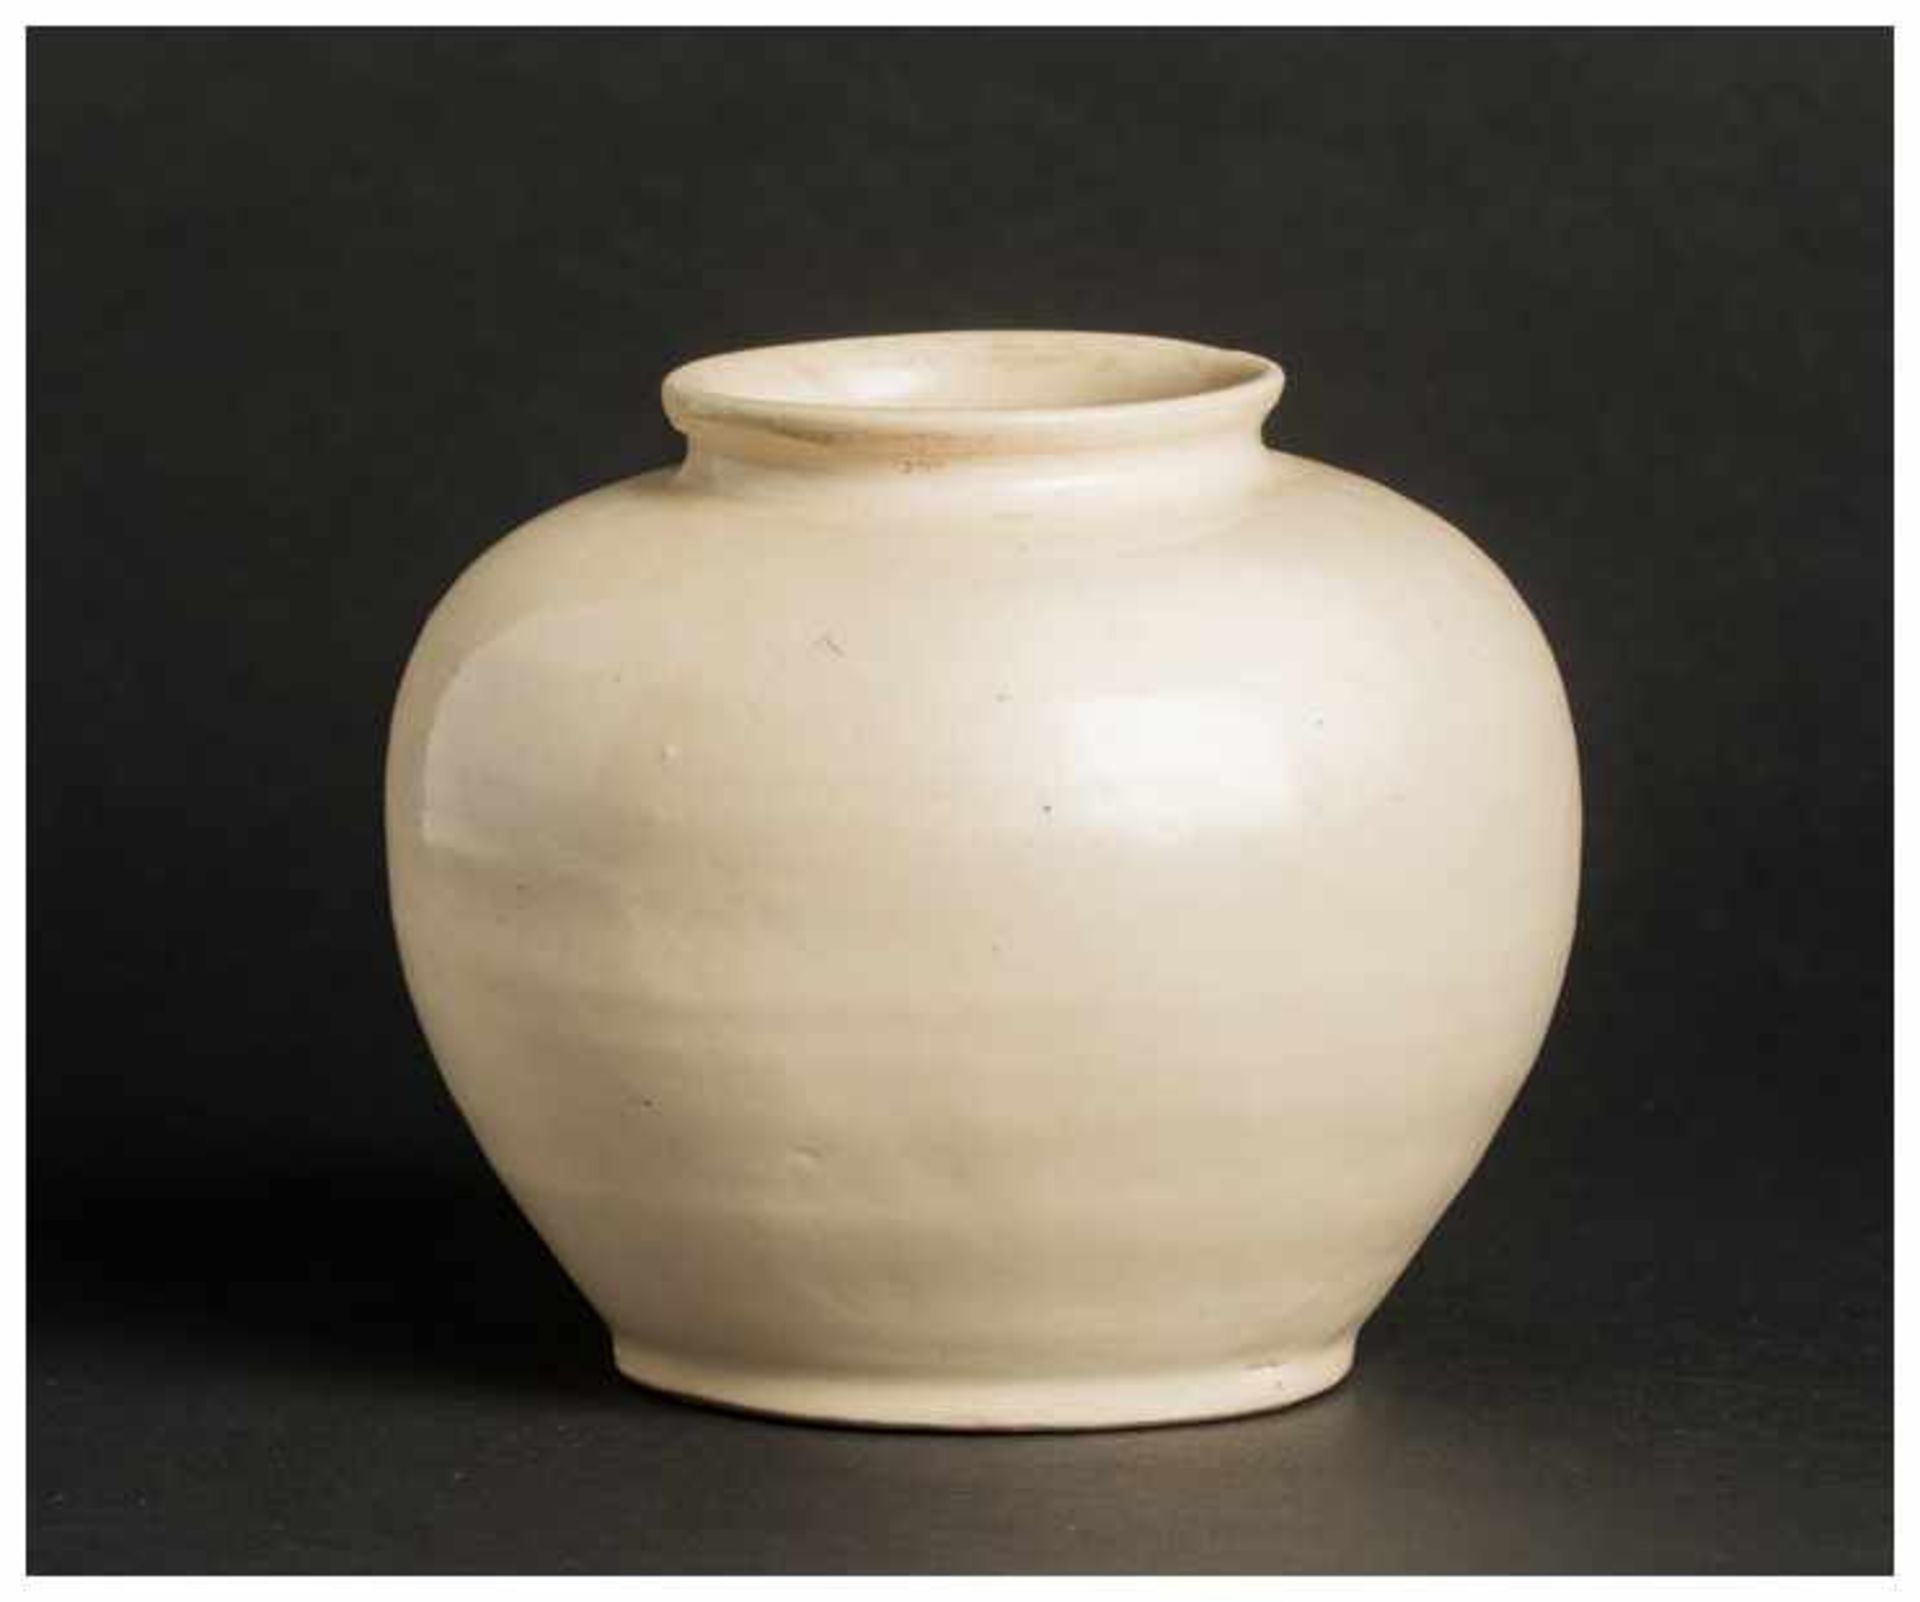 A CHINESE GLAZED STONEWARE POT VESSEL Glazed stoneware. China, Ming to Qing dynastyA spherically